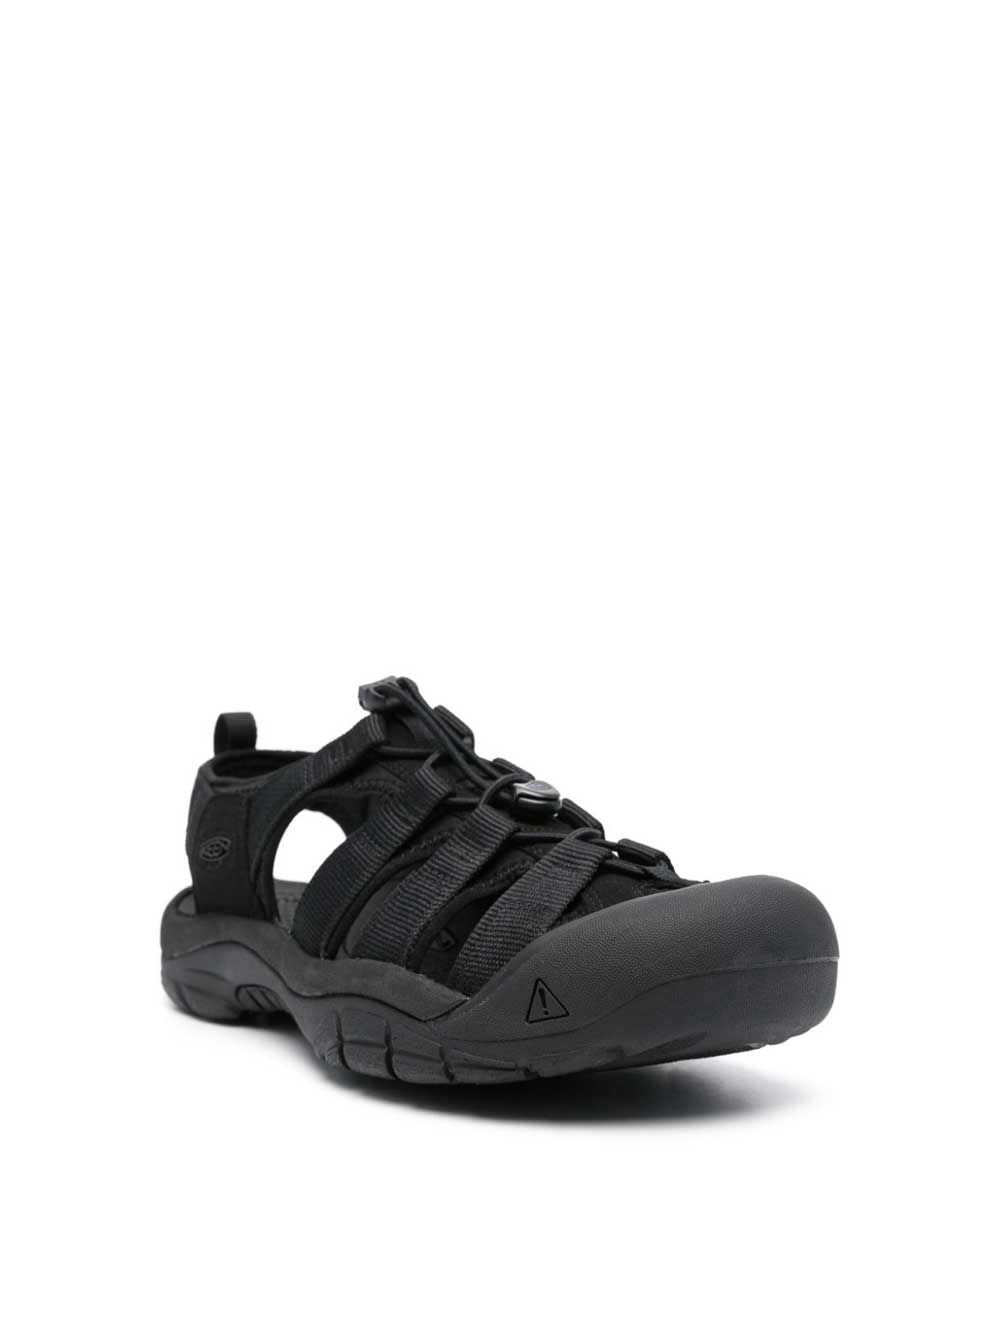 Men's Black Newport H2 Sandal